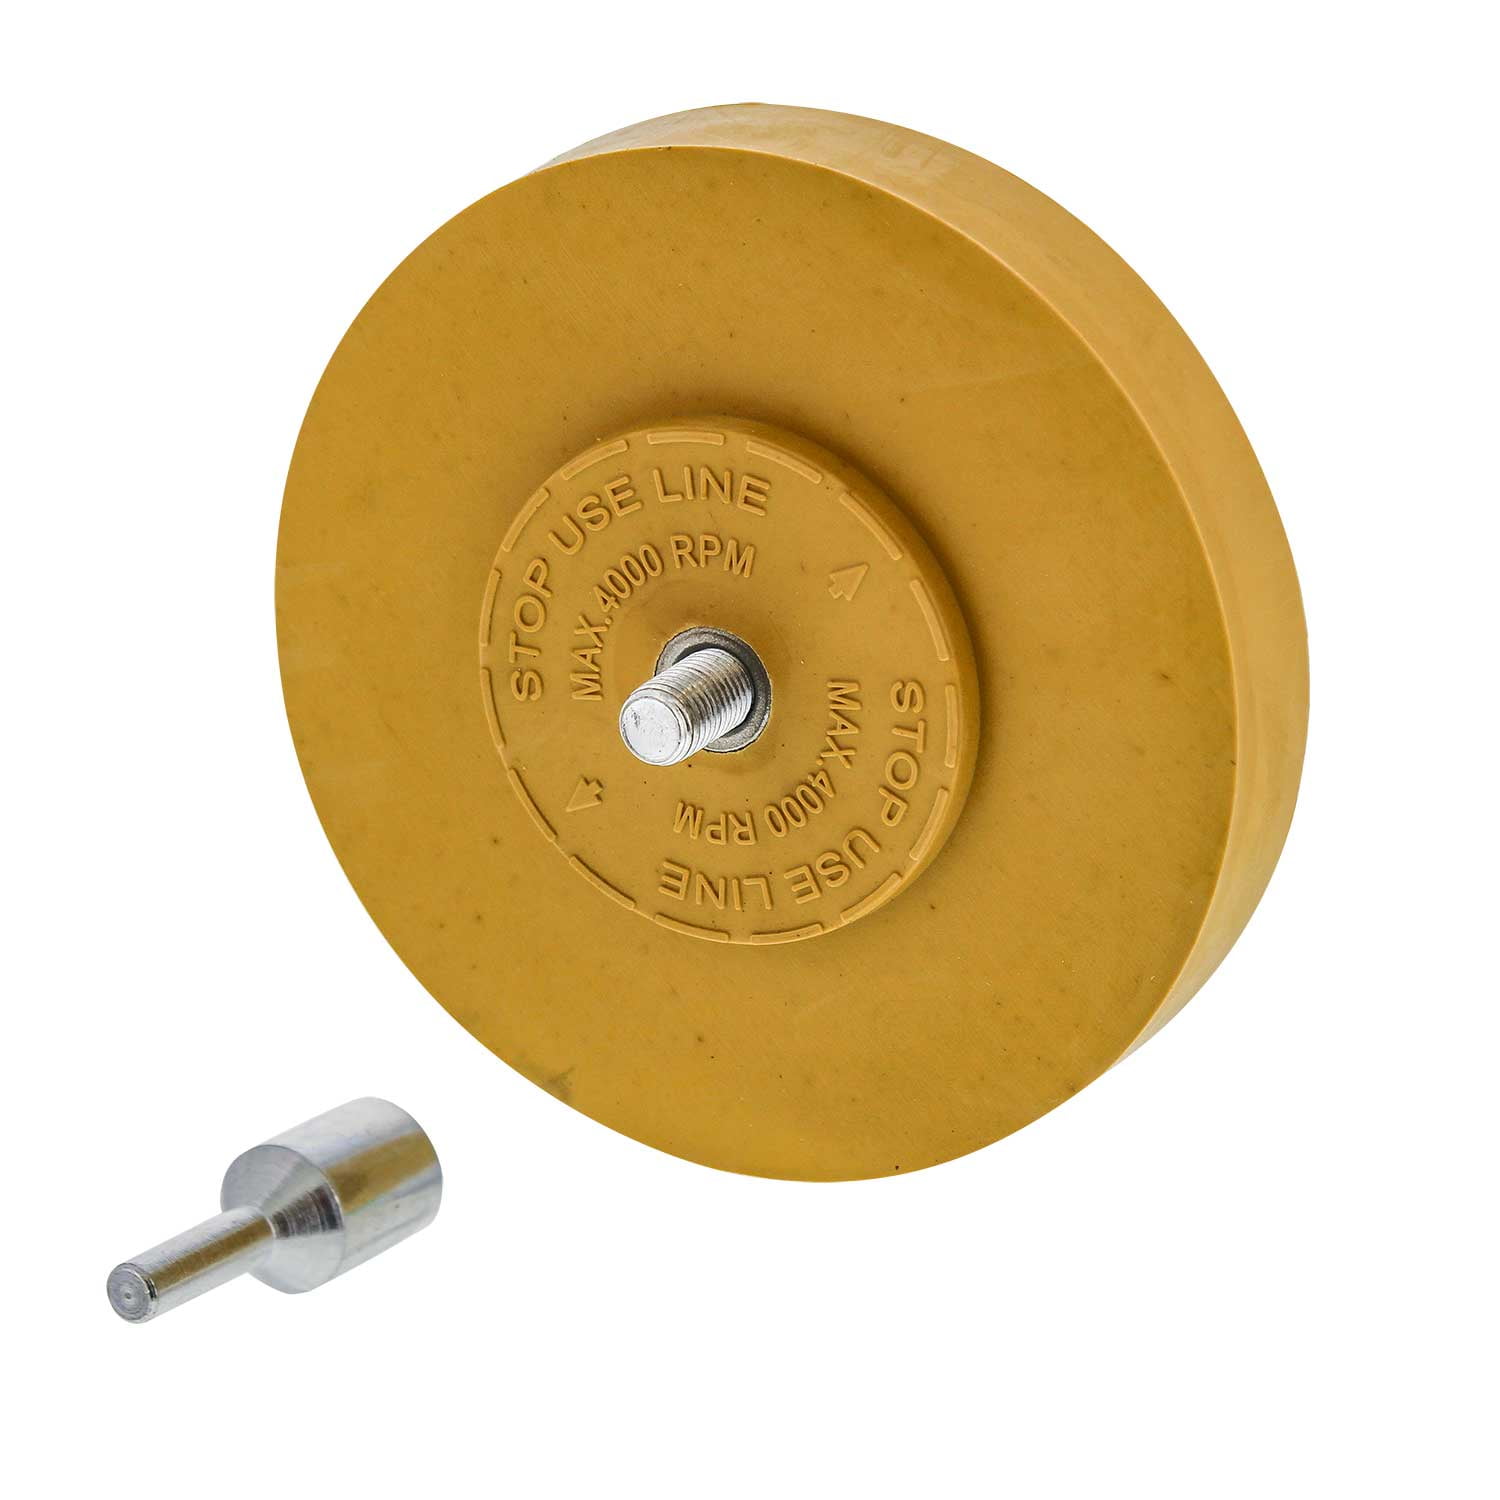 Canopus Rubber Eraser Wheel 4” inch Pad